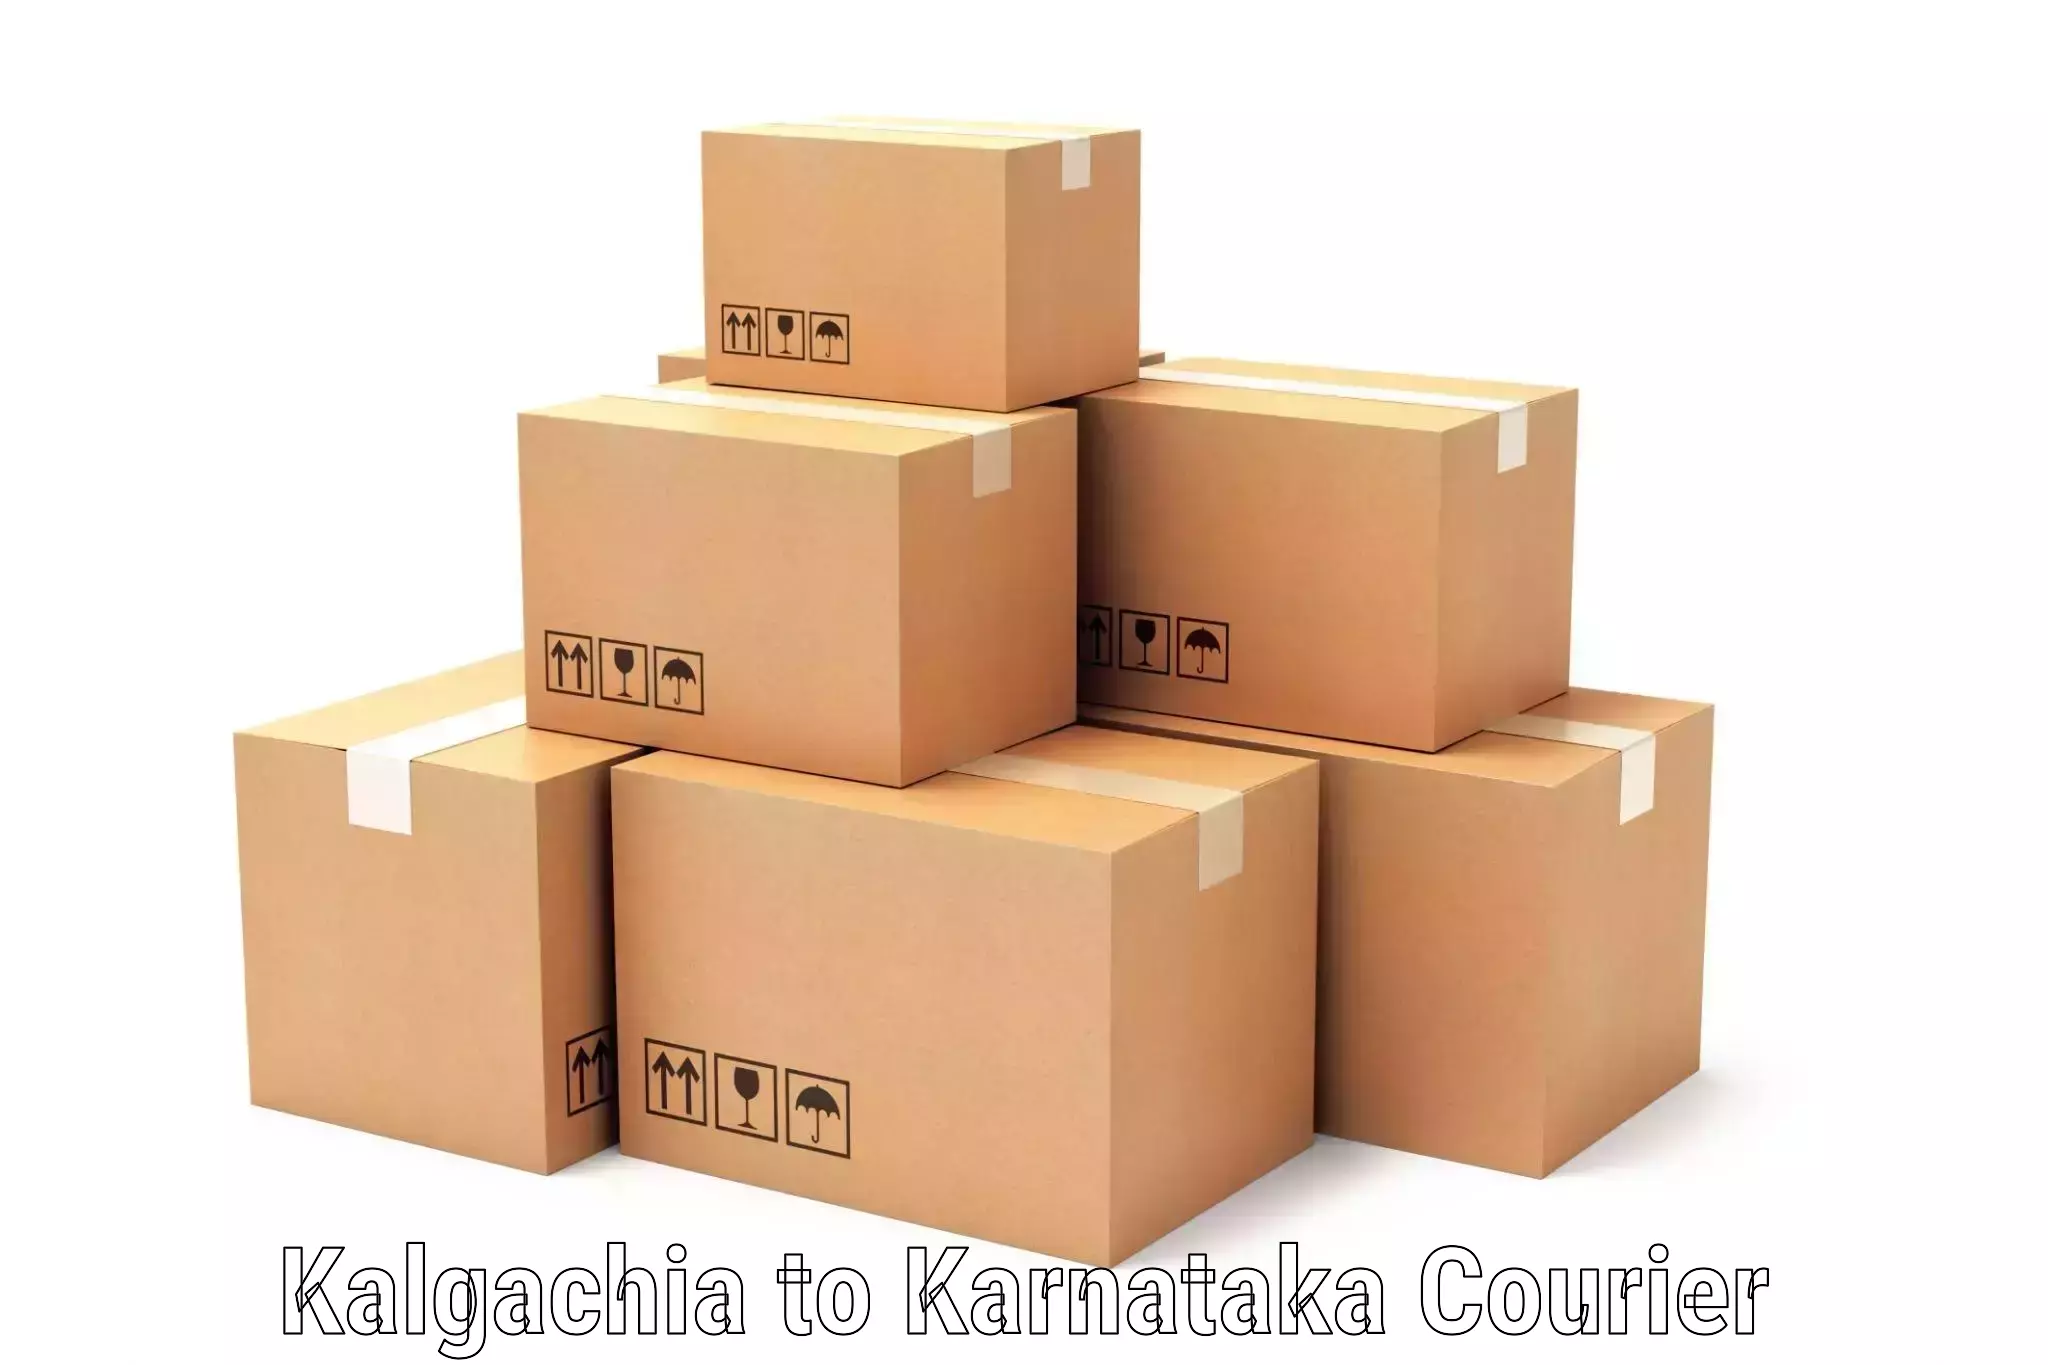 High-performance logistics Kalgachia to Raichur